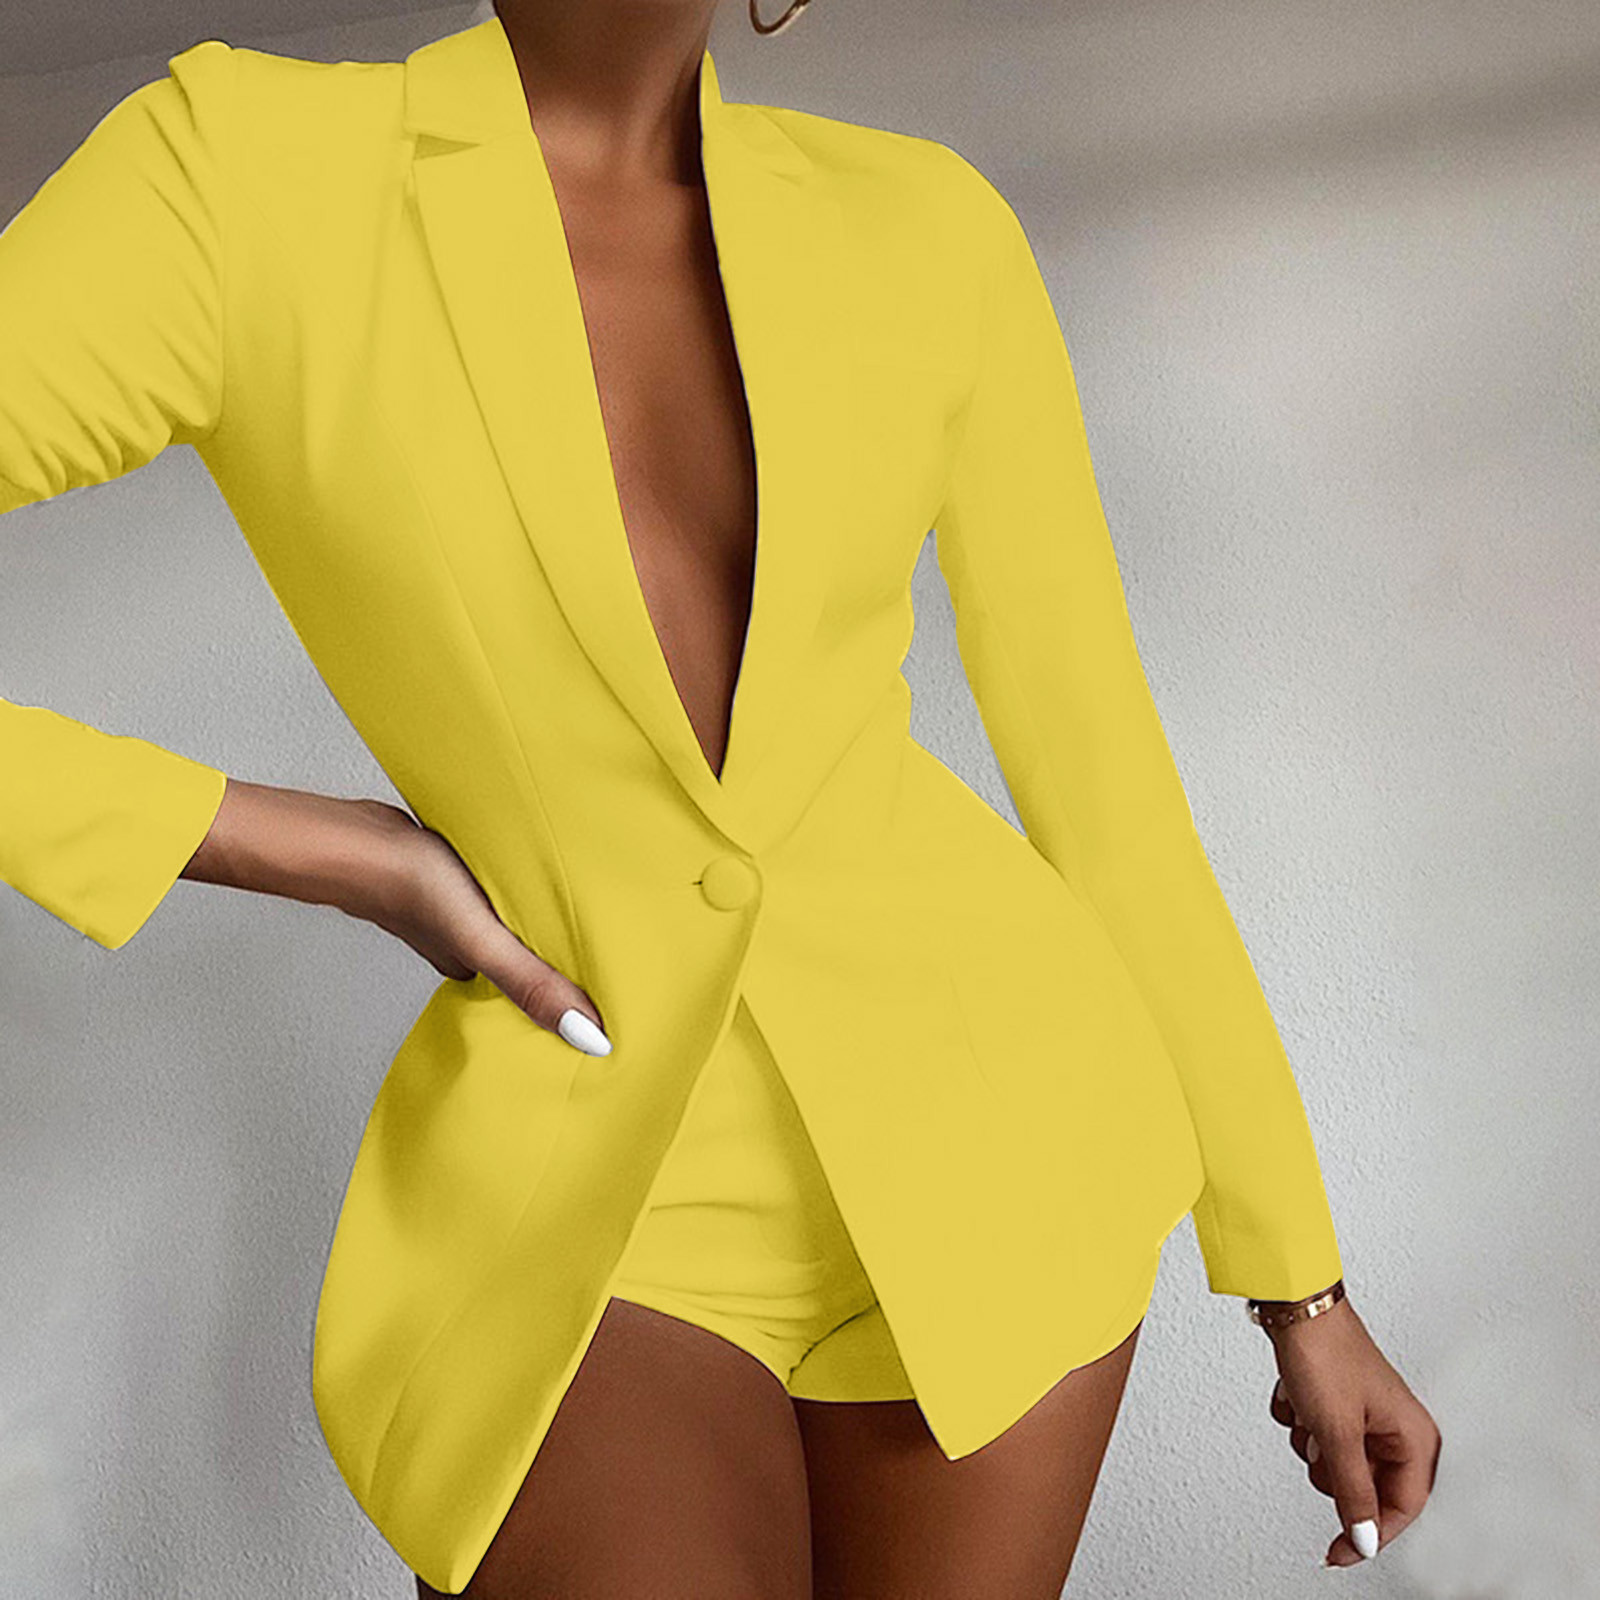 iOPQO blazer jackets for women Women's Casual Light Weight Thin Jacket Slim Coat Long Sleeve Blazer Office Business Coats Jacket Women's Blazers Yellow M - image 2 of 7